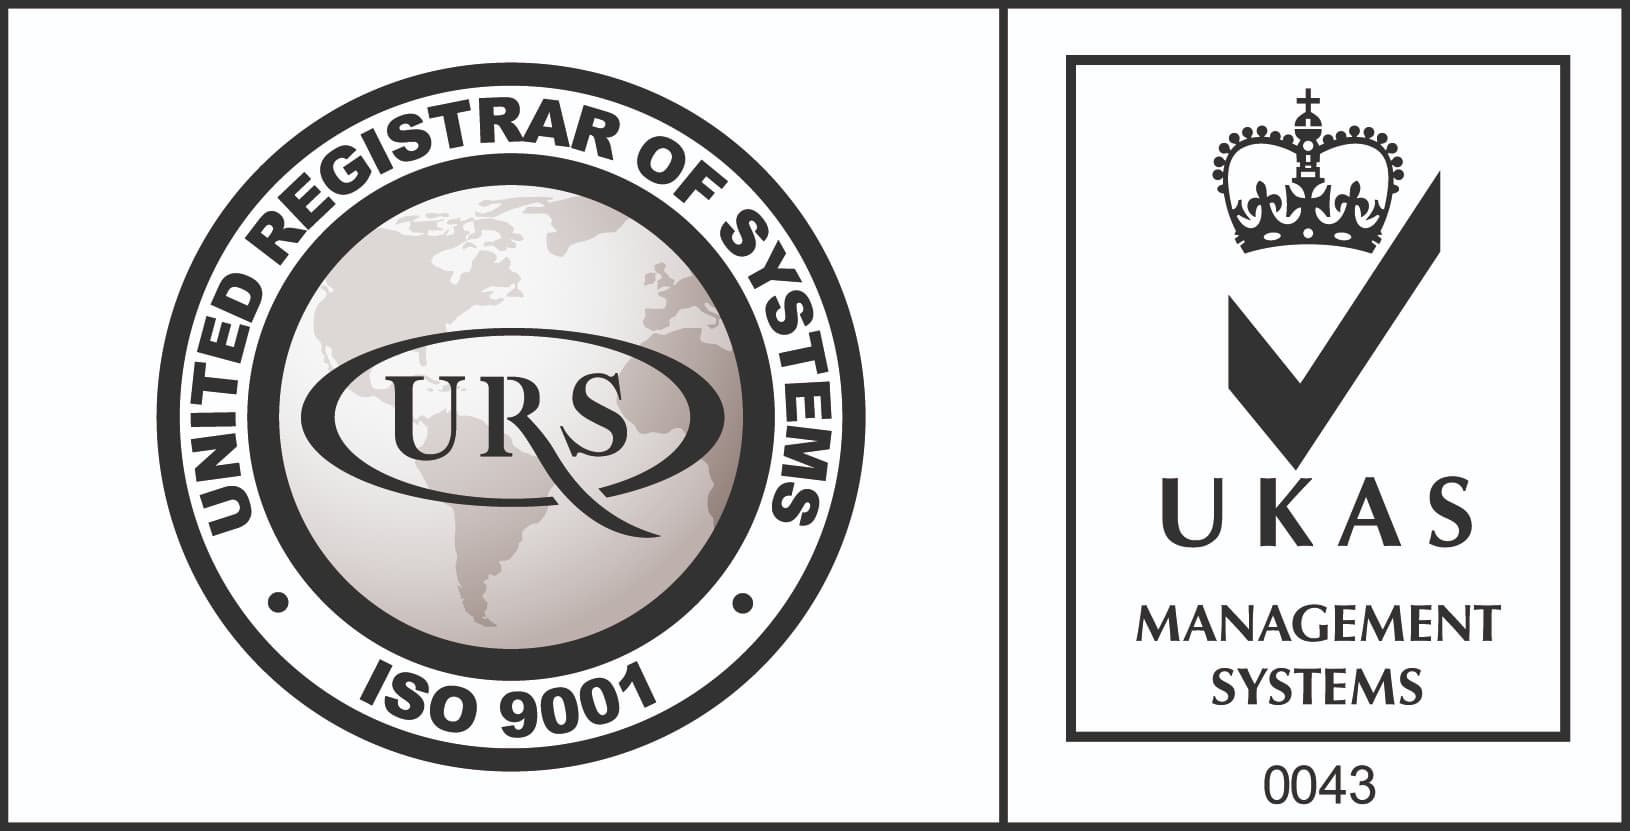 United Registrar of Systems ISO-9001